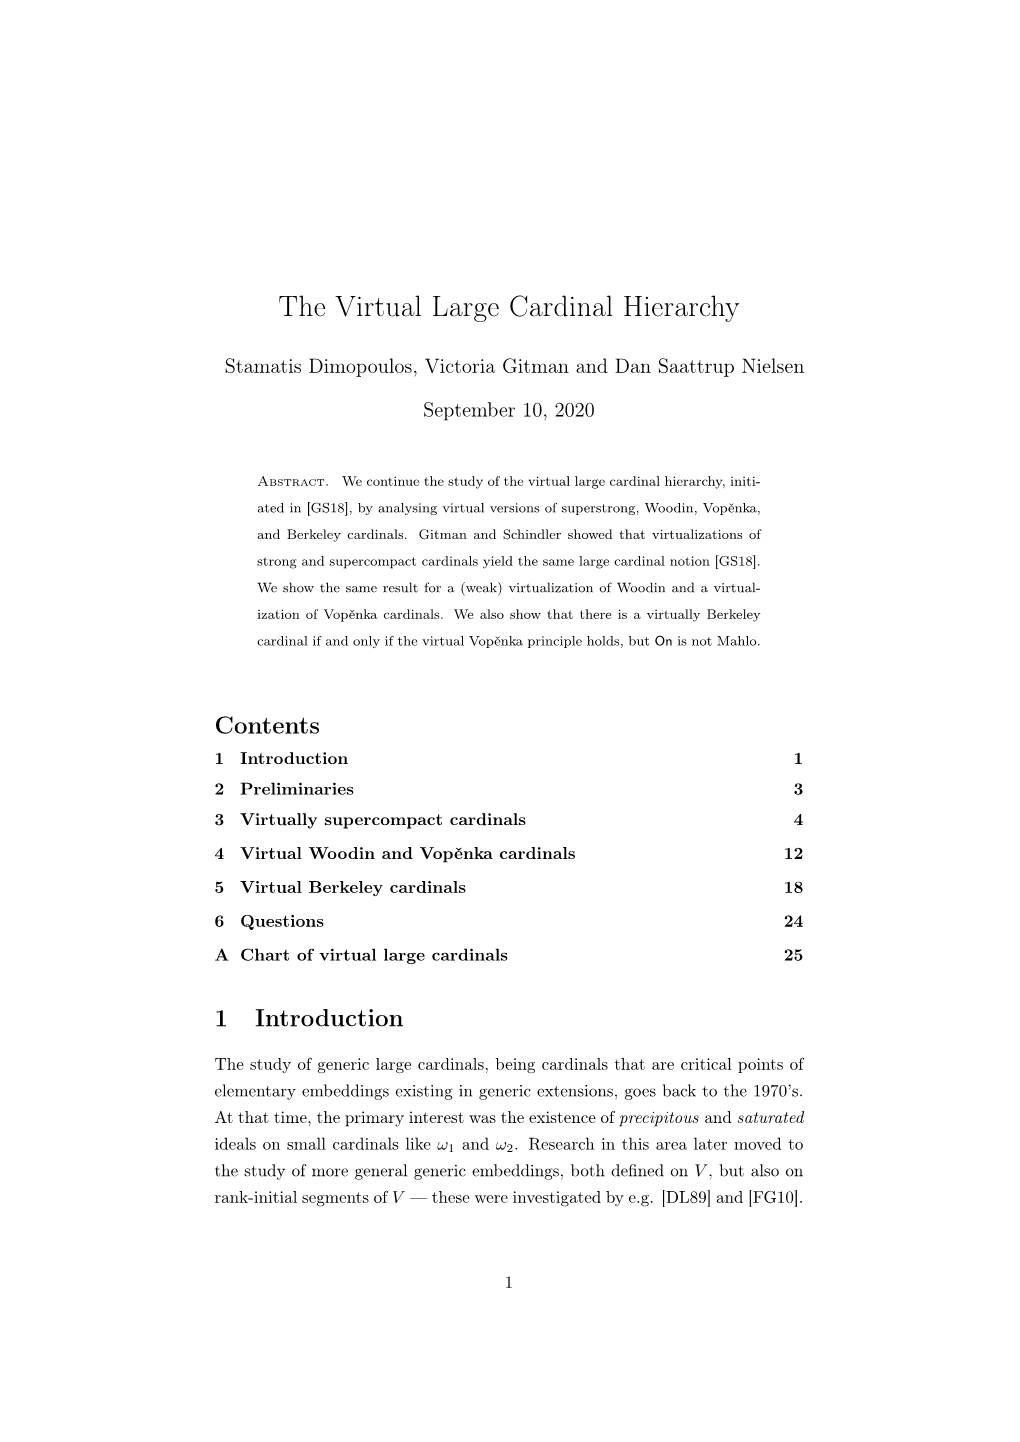 The Virtual Large Cardinal Hierarchy